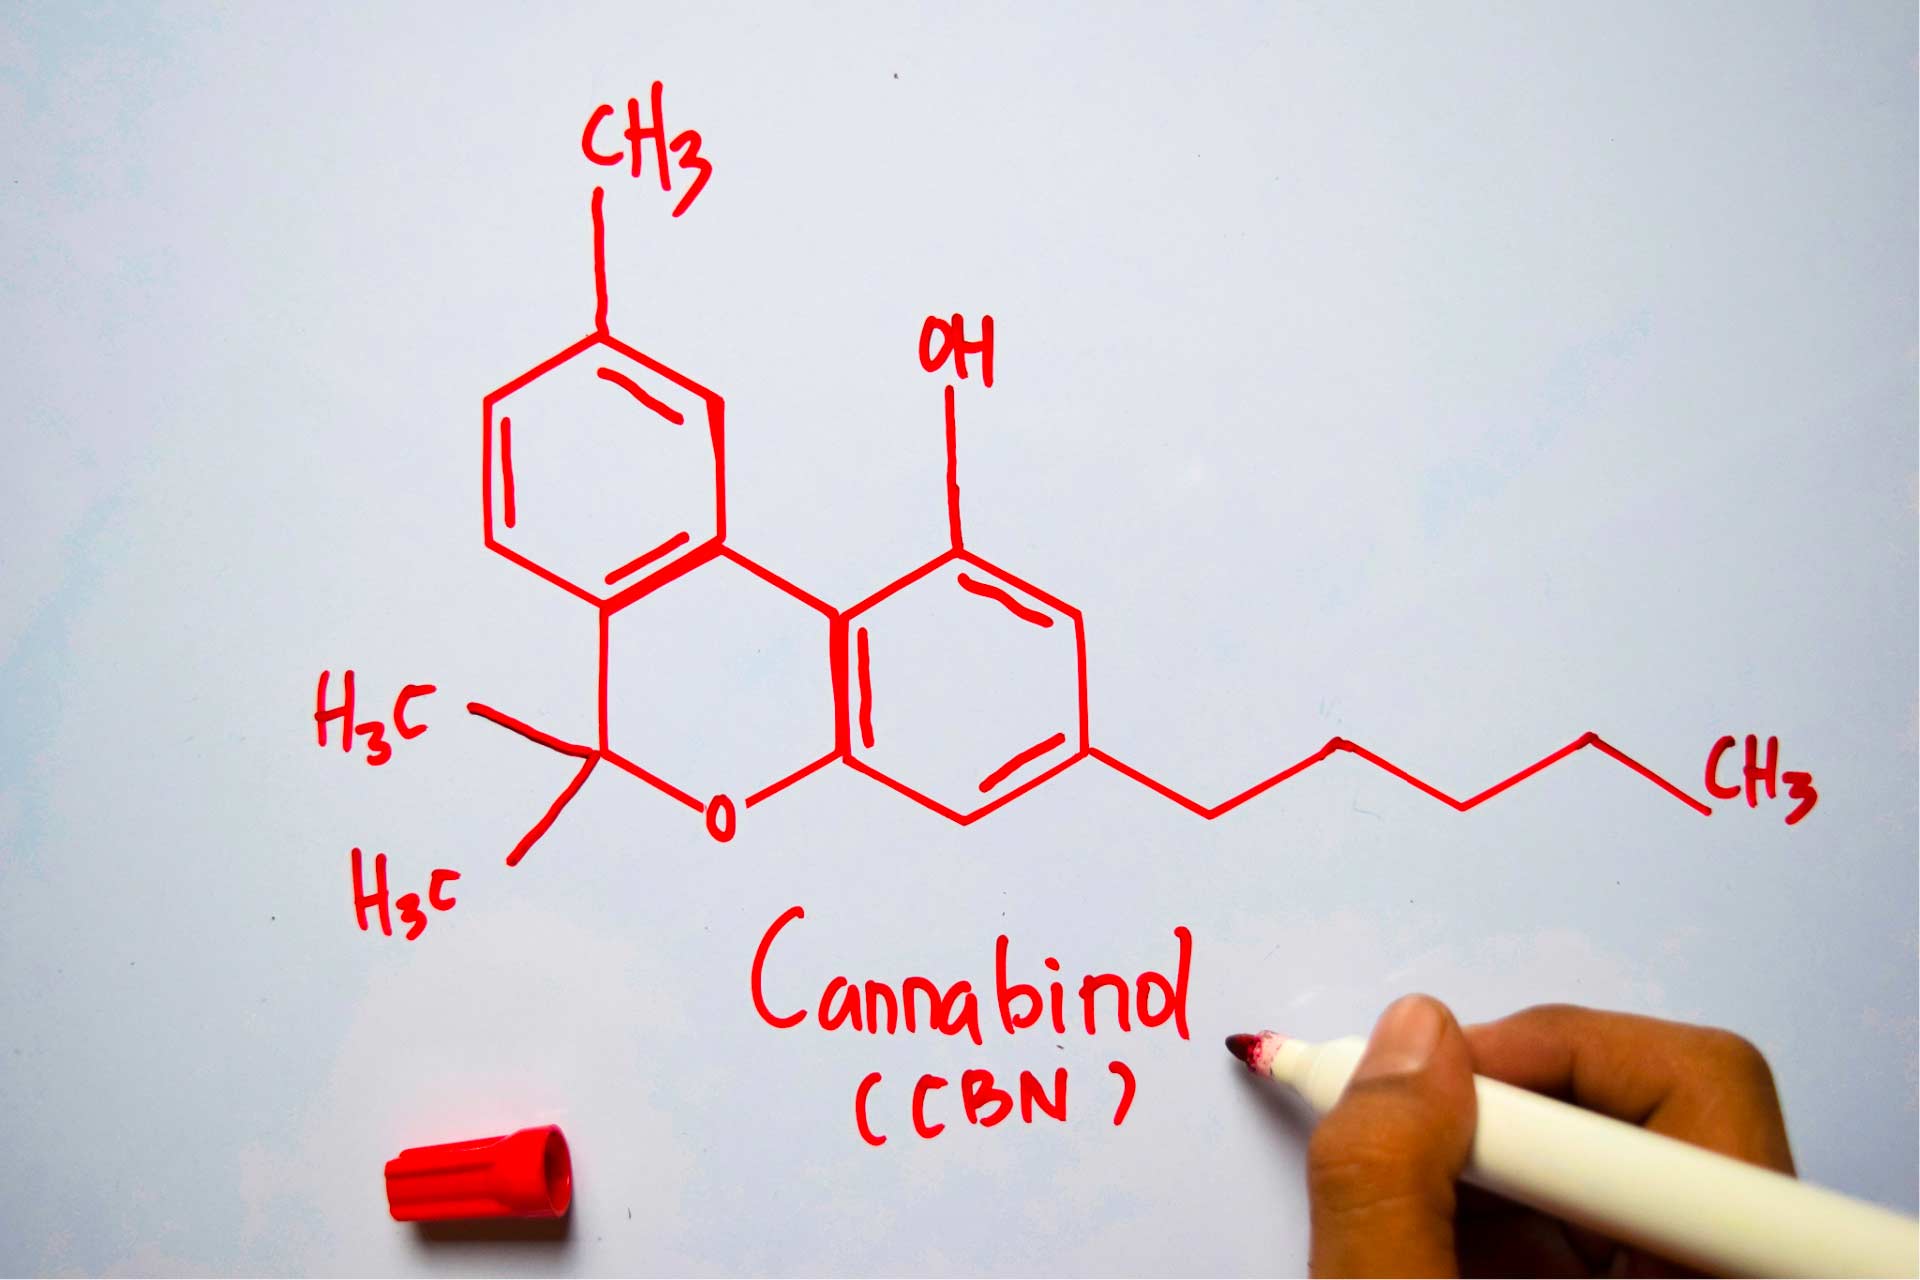 Cannabinol (CBN) molecular structure drawn on whiteboard.